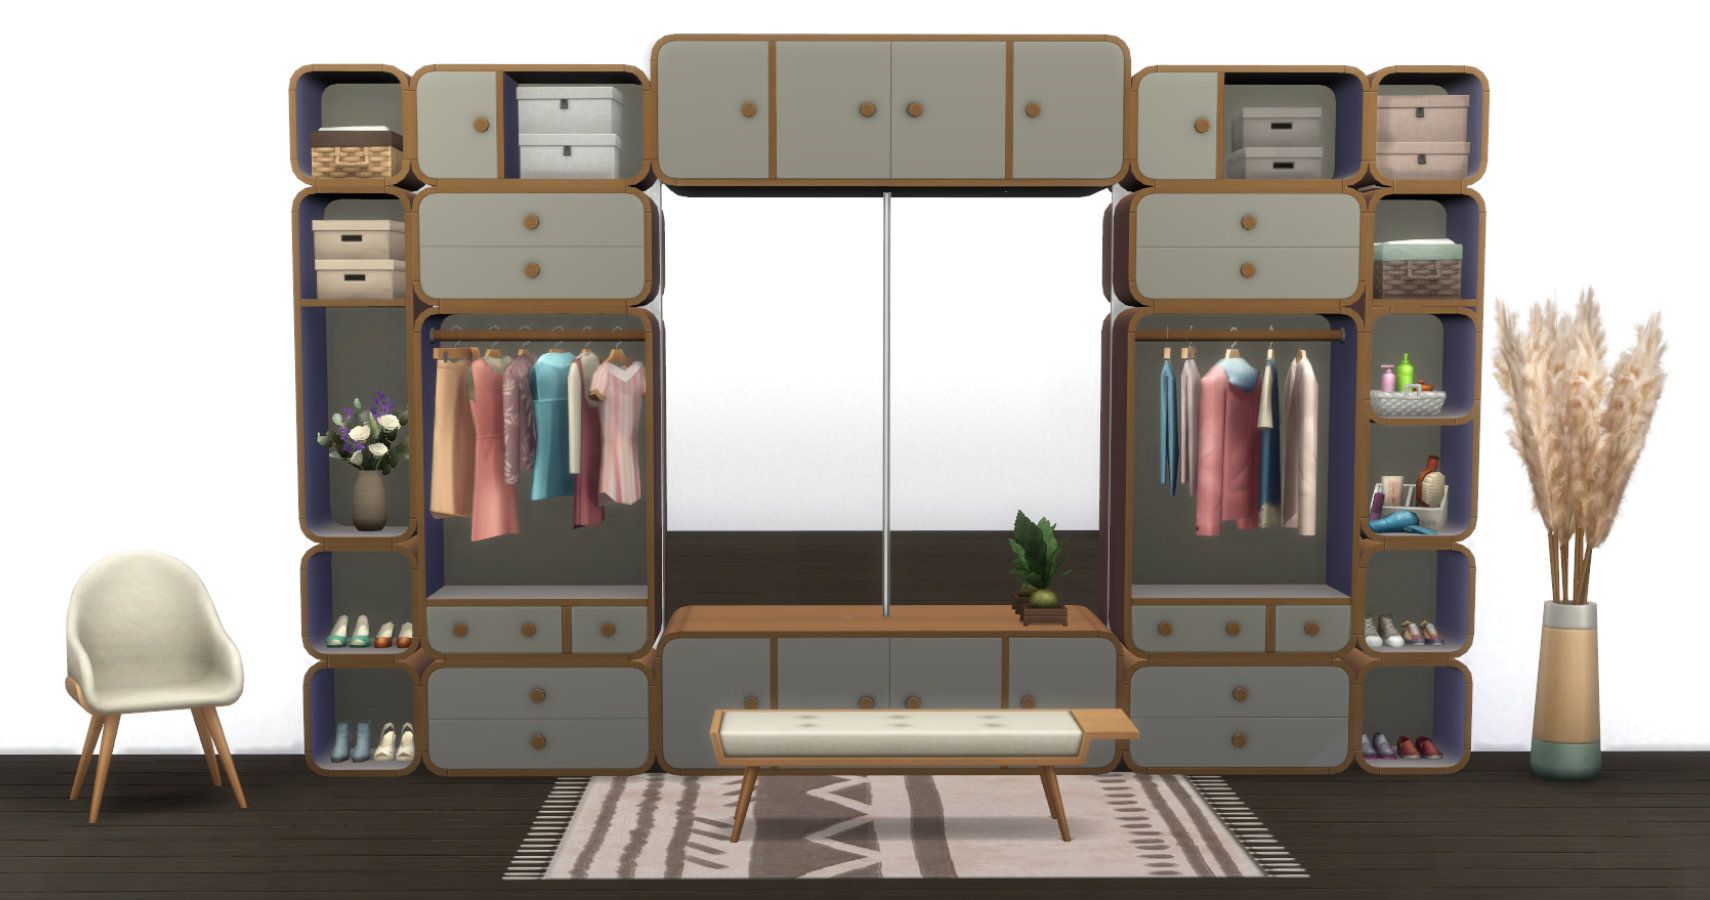 Sims-4-decor-bedroom-design-1